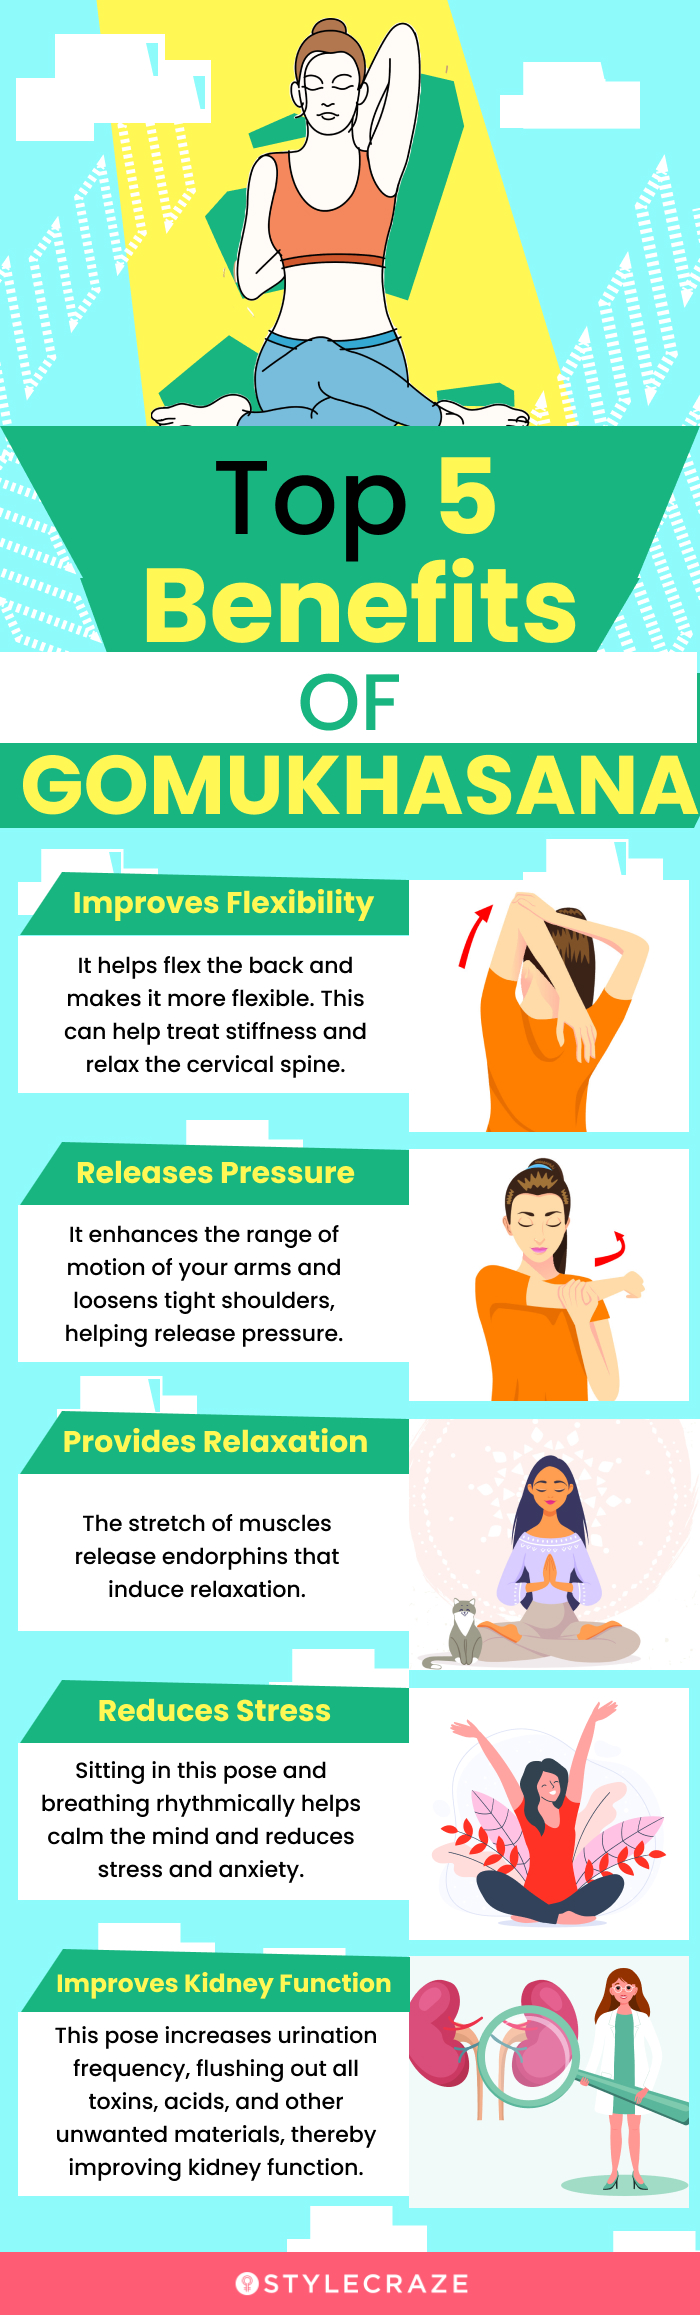 top 5 benefits of gomukhasana (infographic)